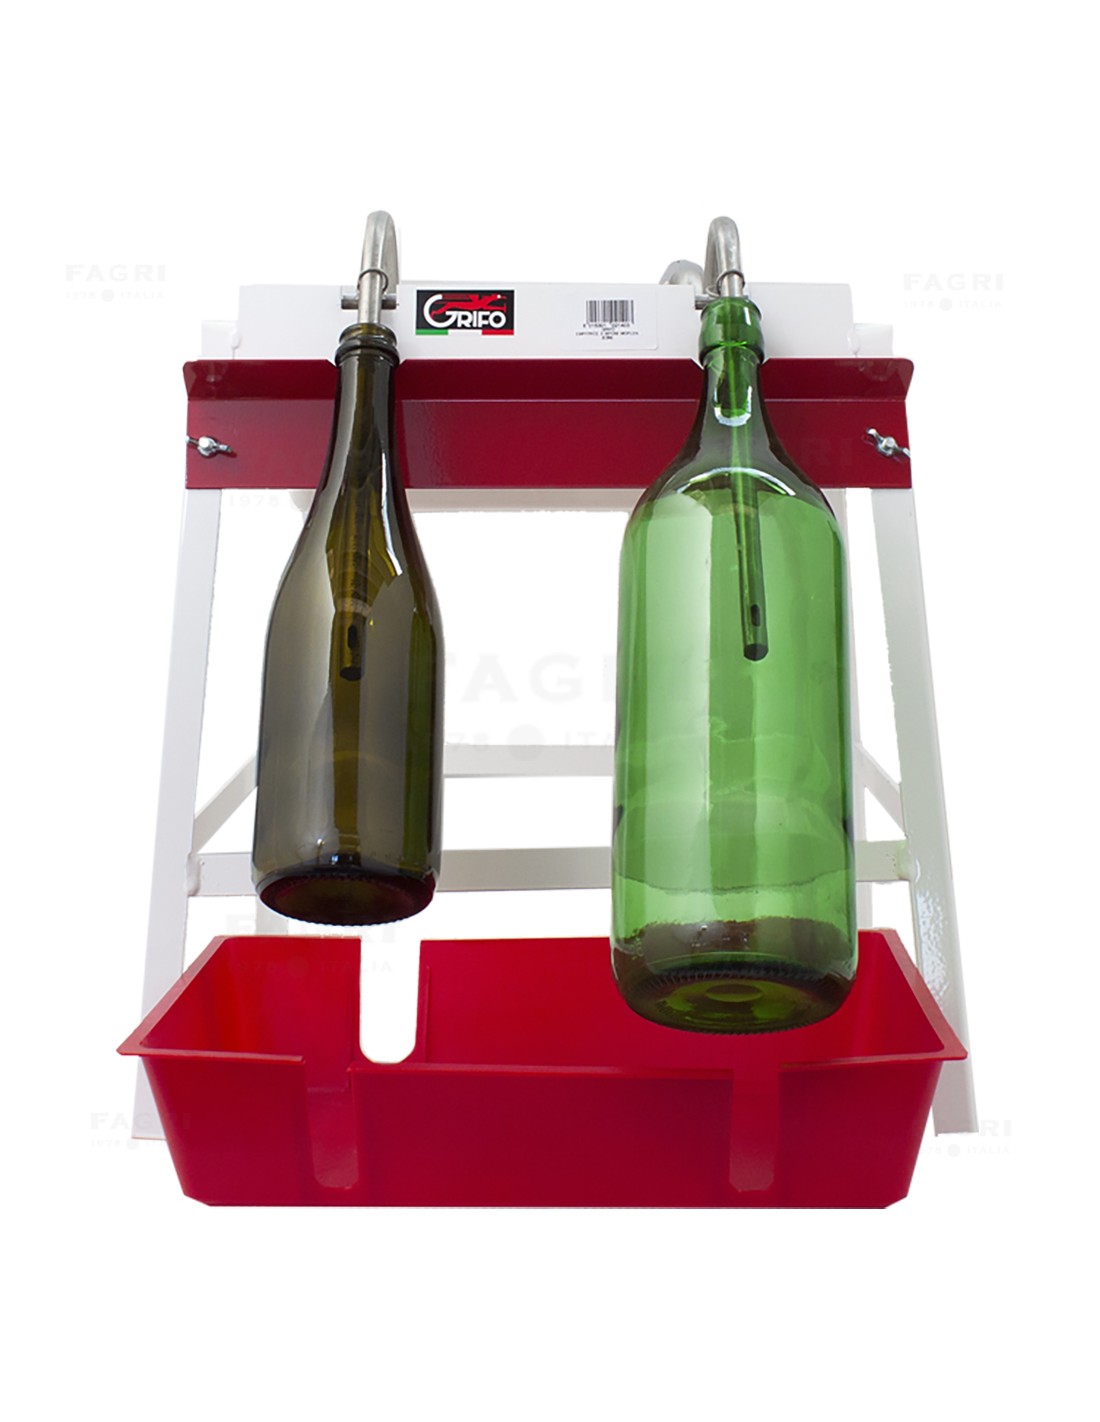 Imbottigliatrice 2 becchi riempitrice per vino per bottiglie